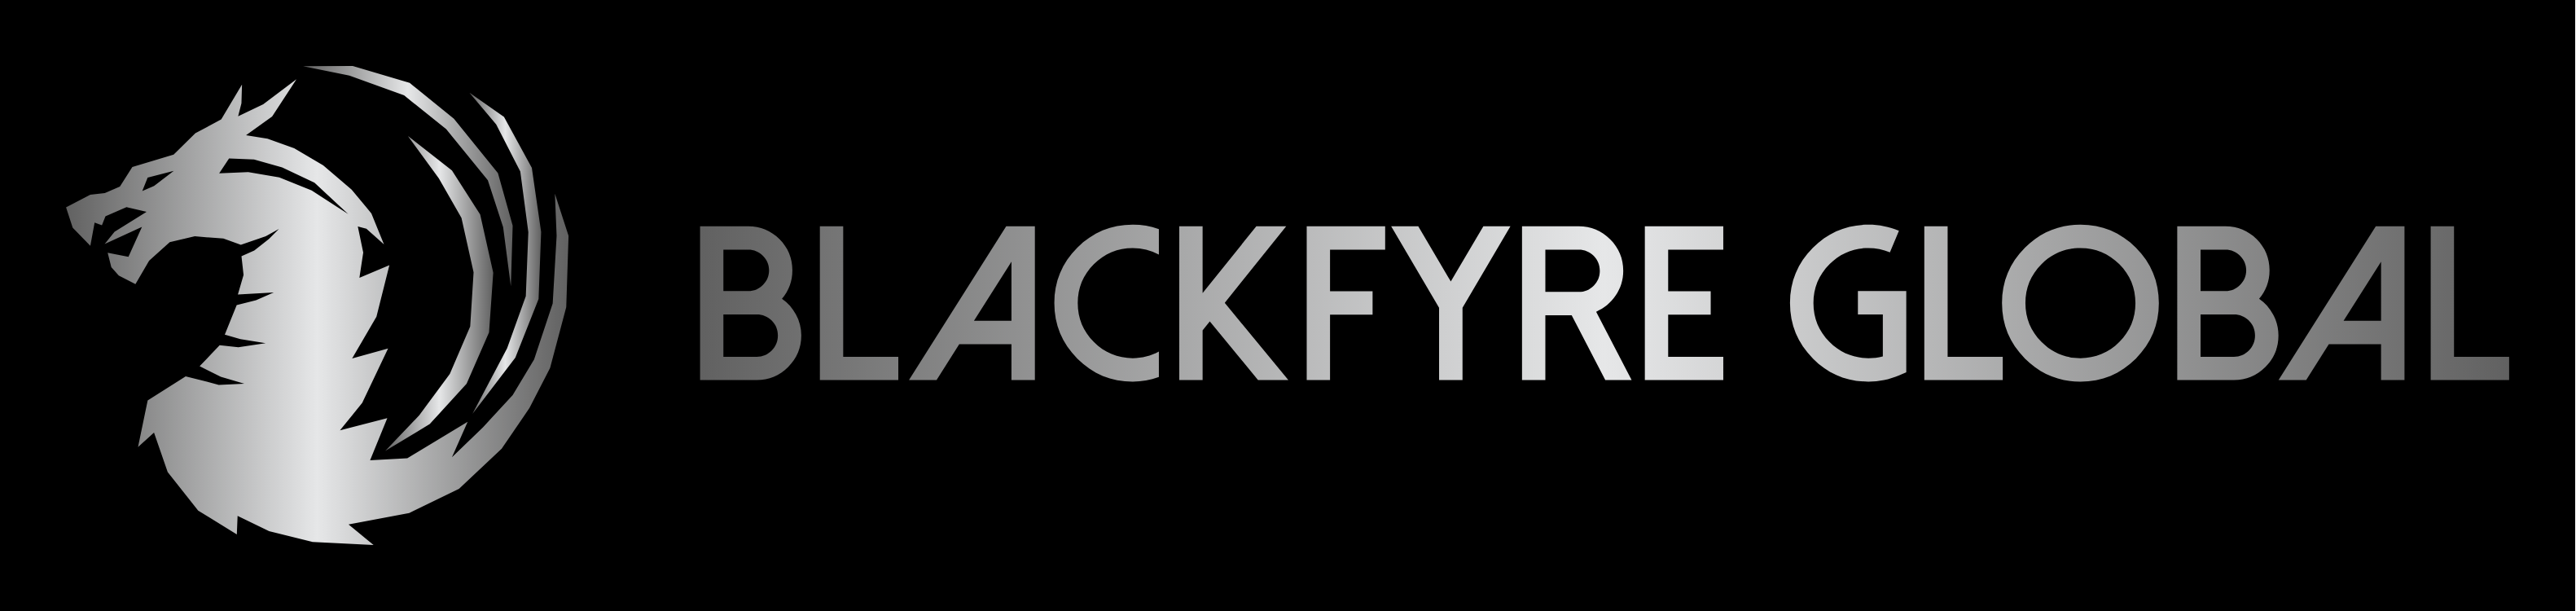 Blackfyre Global